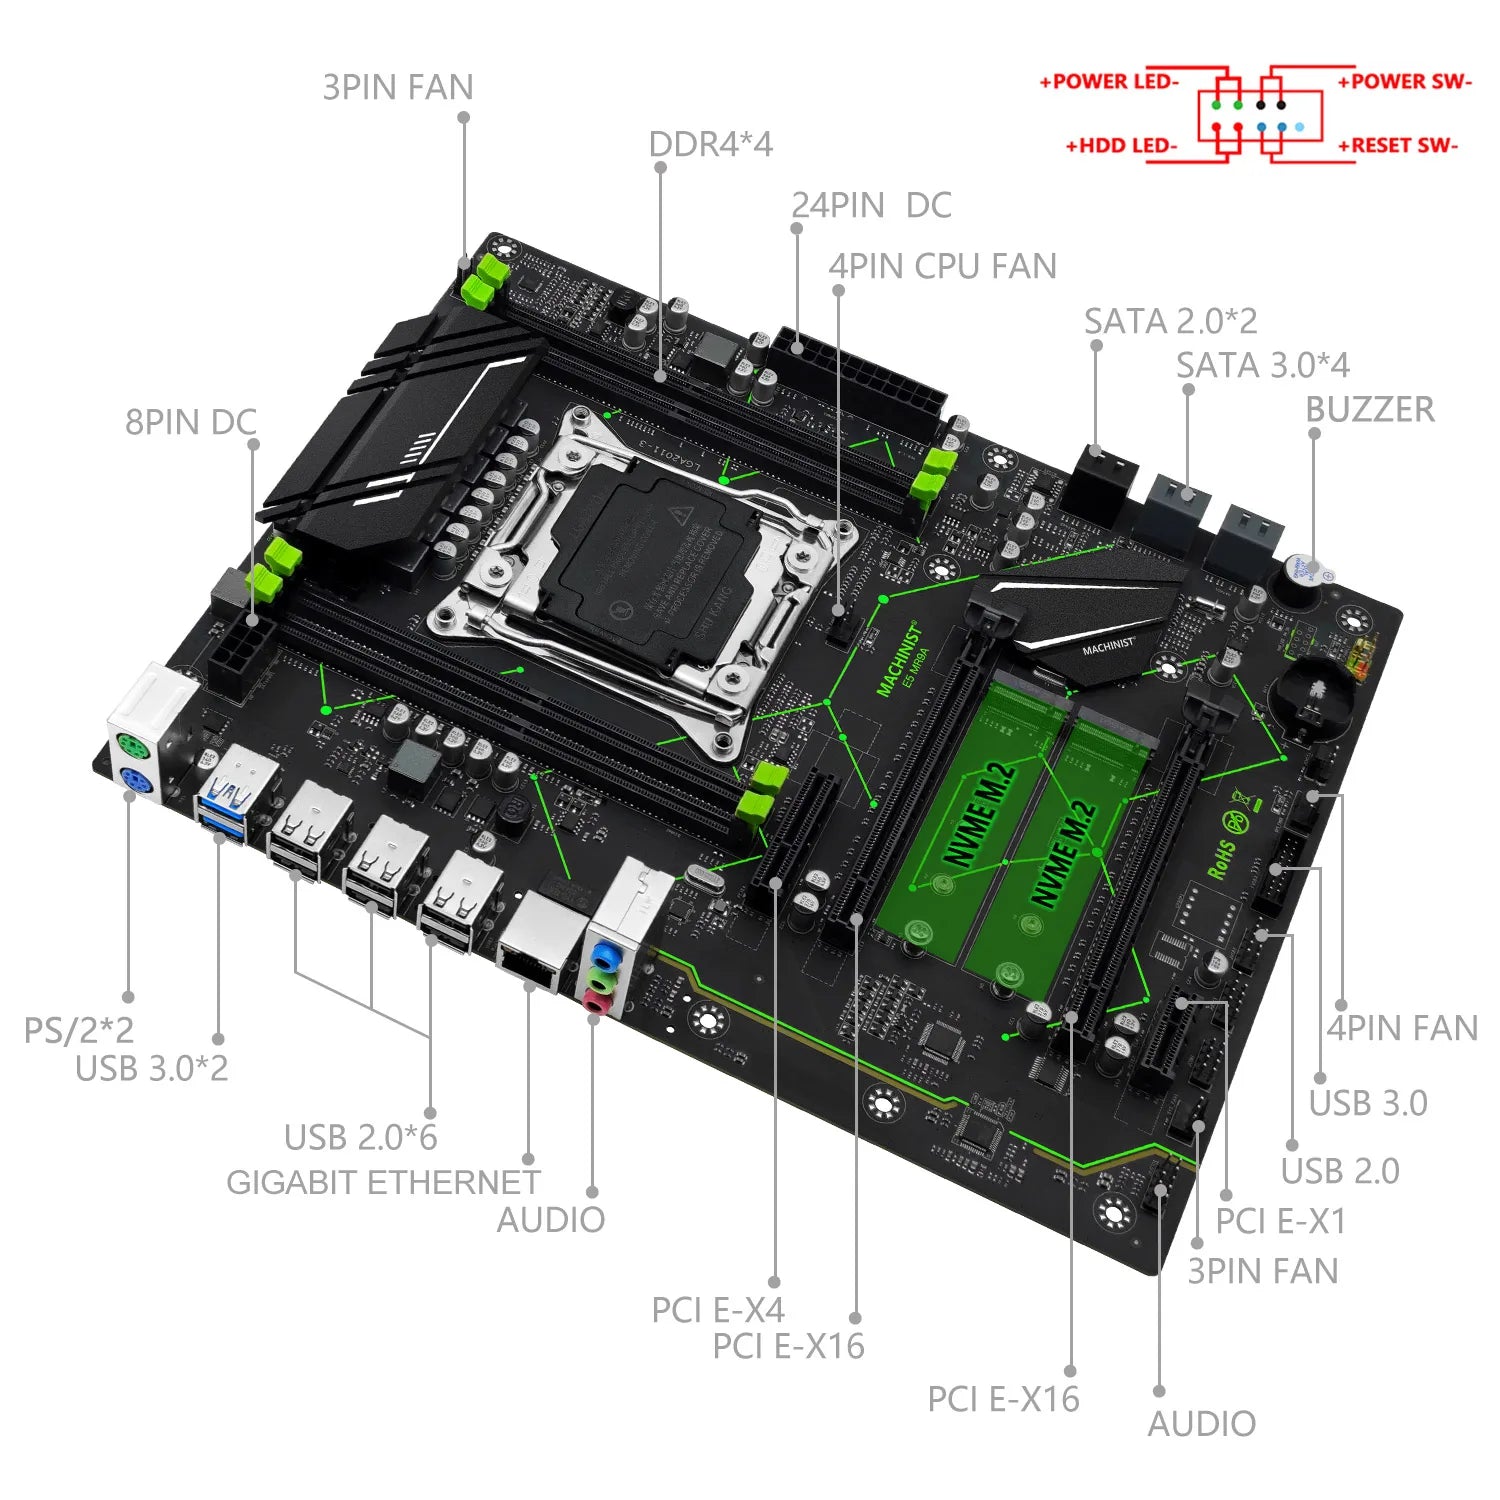 Machinist LGA 2011-3 Intel Xeon E5 2670 V3 Desktop Motherboard Set